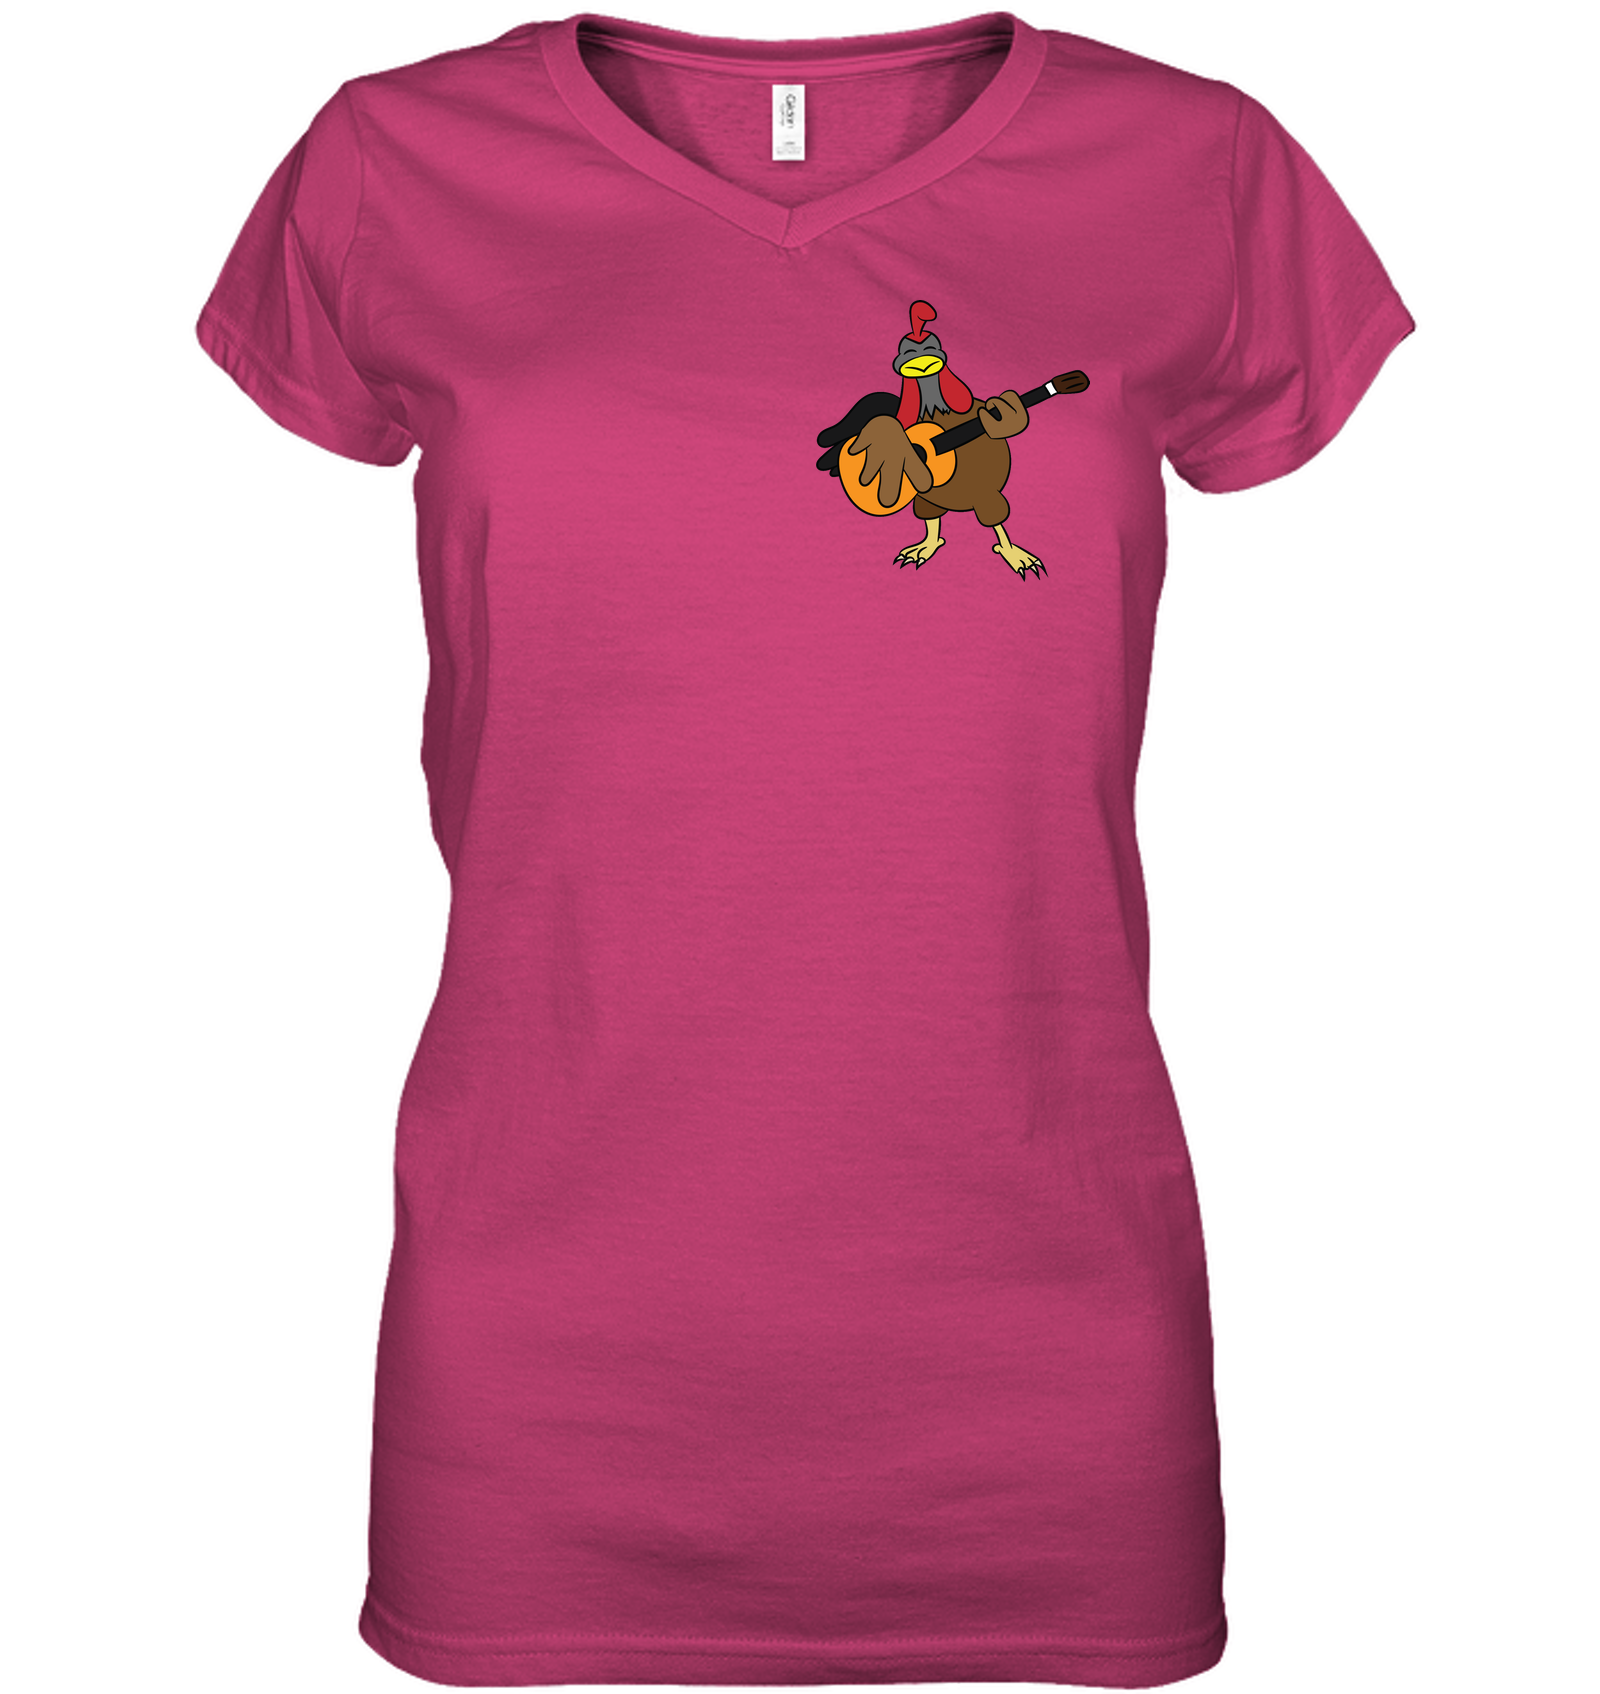 Chicken with Guitar (Pocket Size)  - Hanes Women's Nano-T® V-Neck T-Shirt